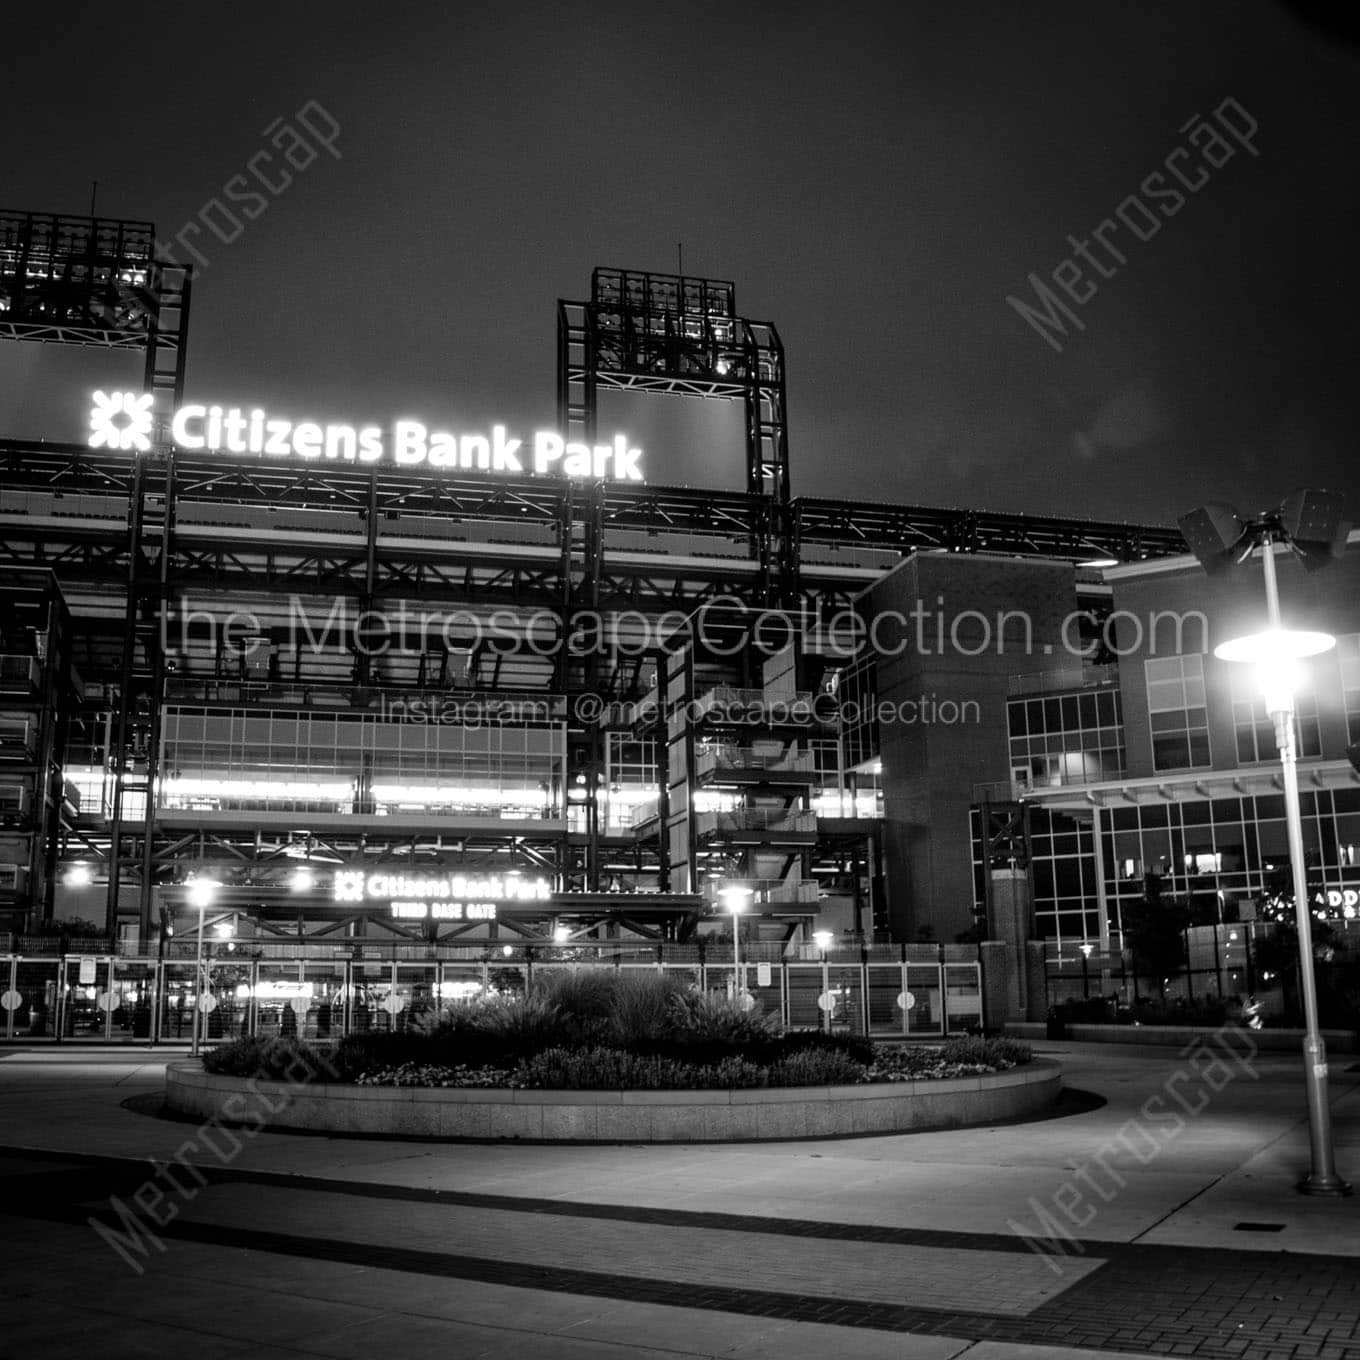 citizens bank park at night Black & White Office Art